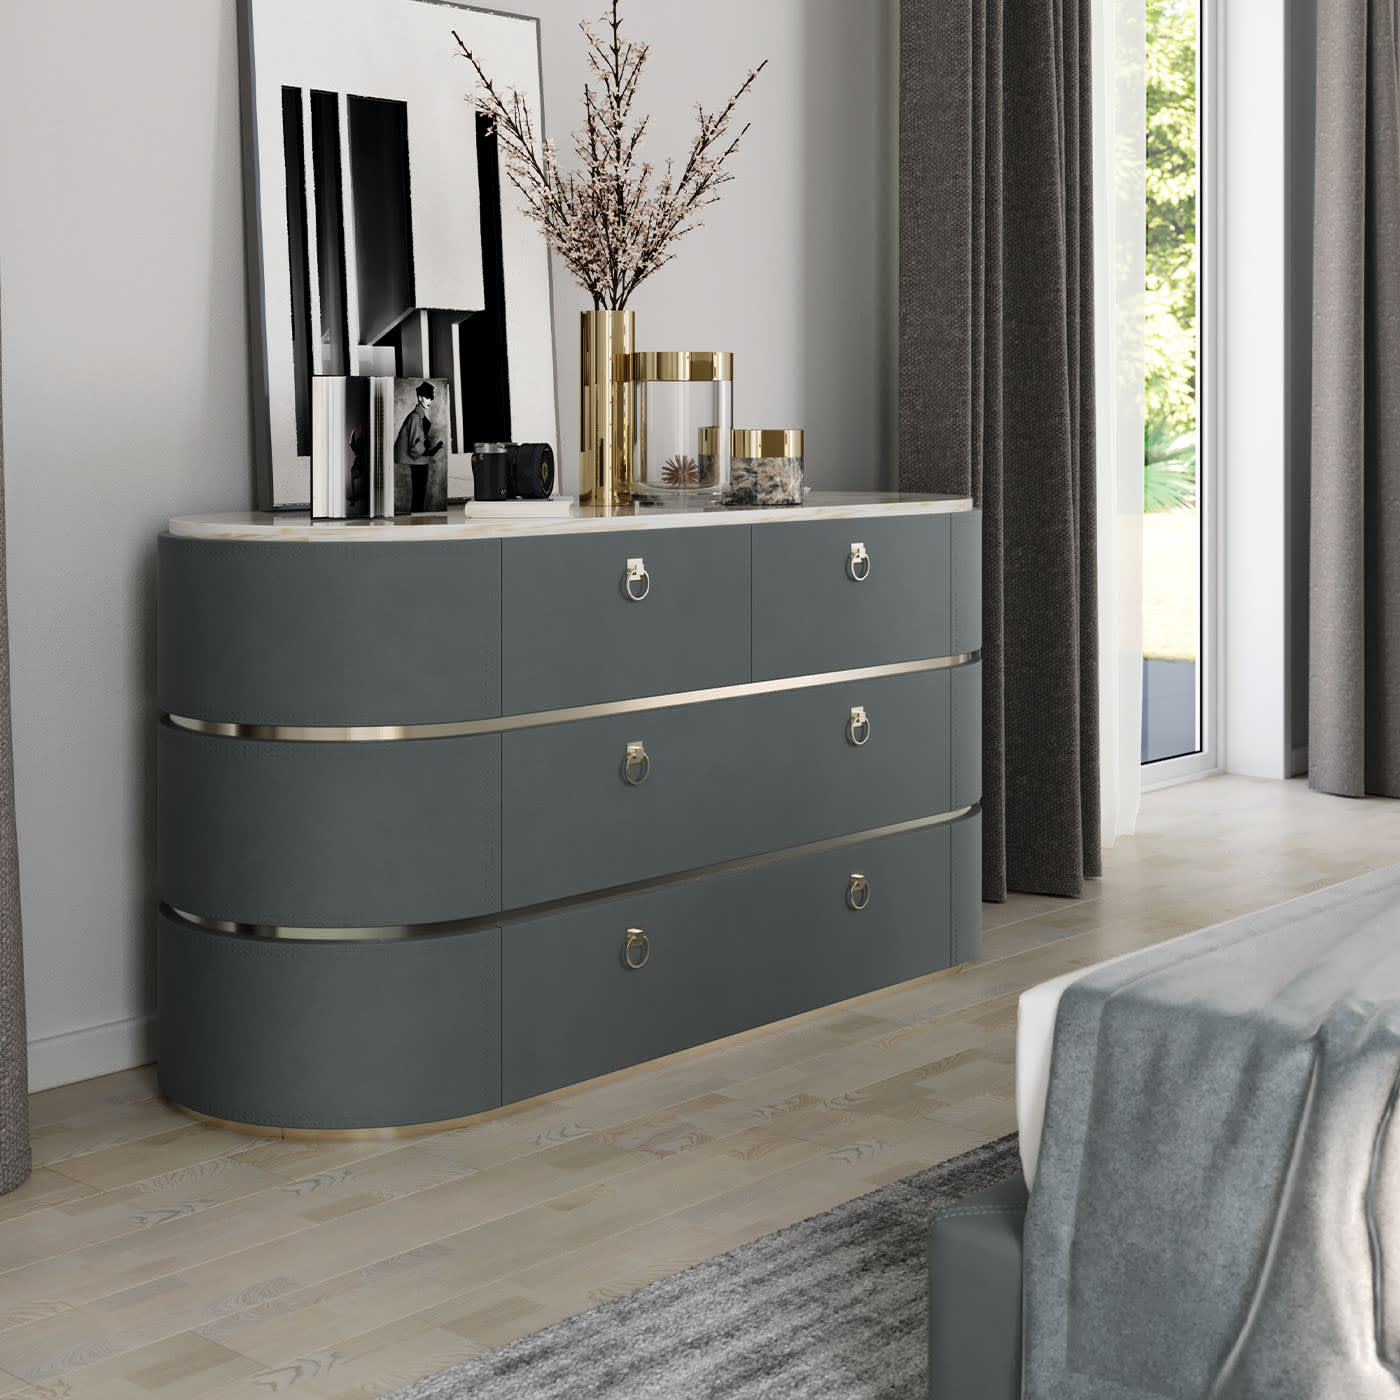 Romeo Luxury Cabinet